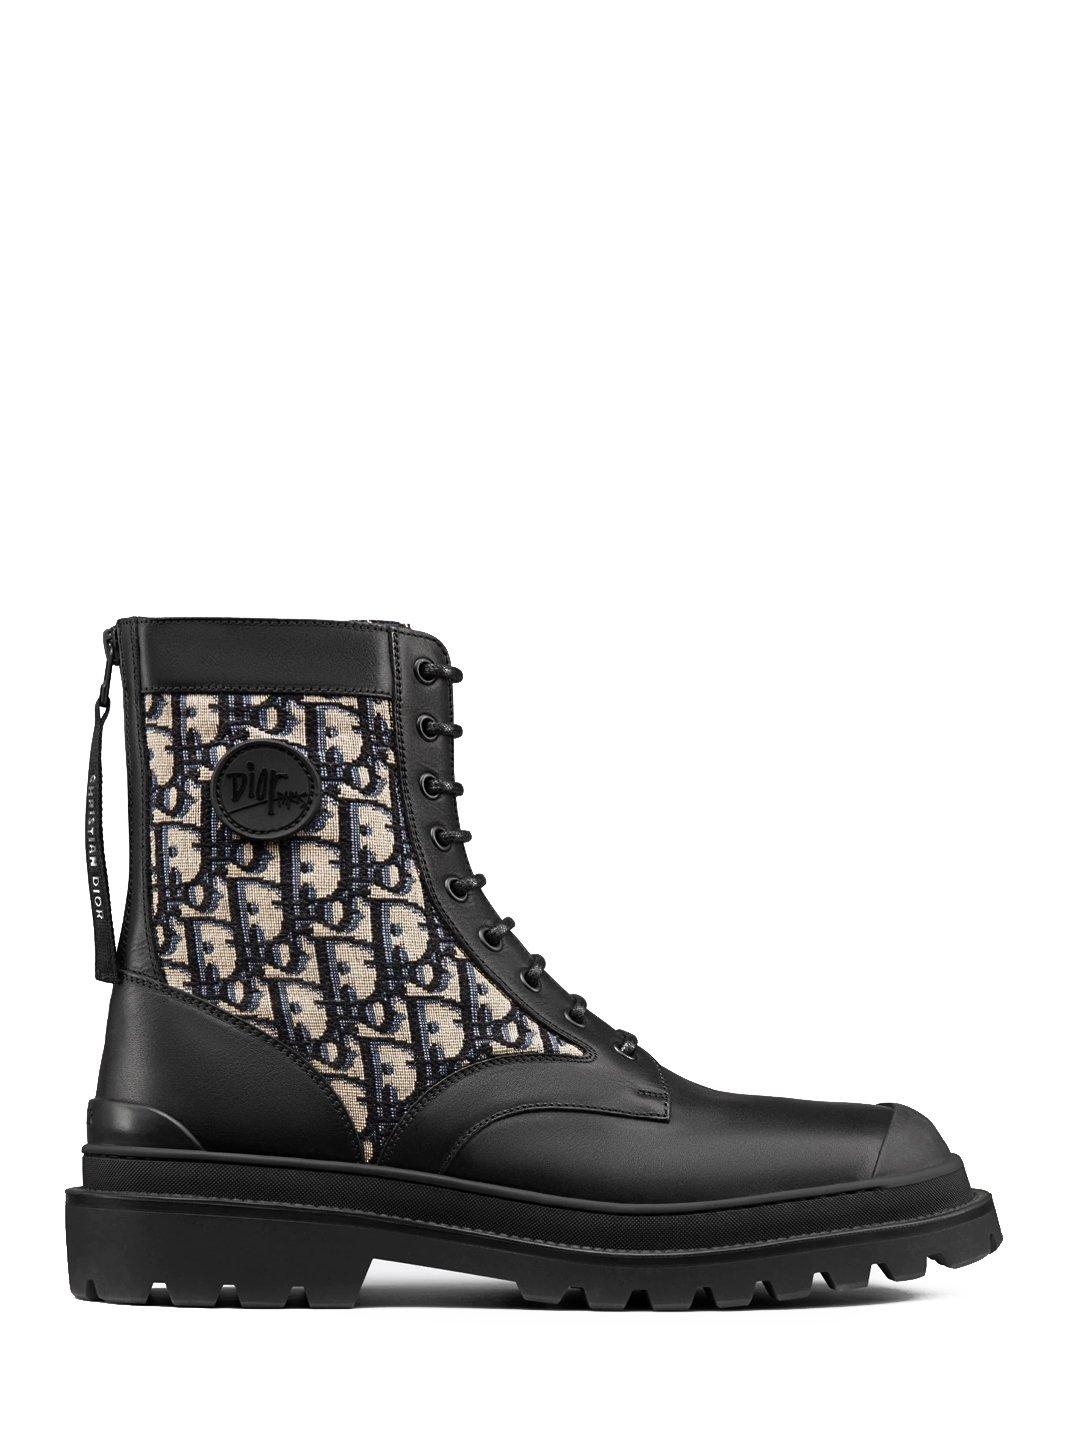 Dior Leather Dior Explorer Boot in Black for Men - Lyst